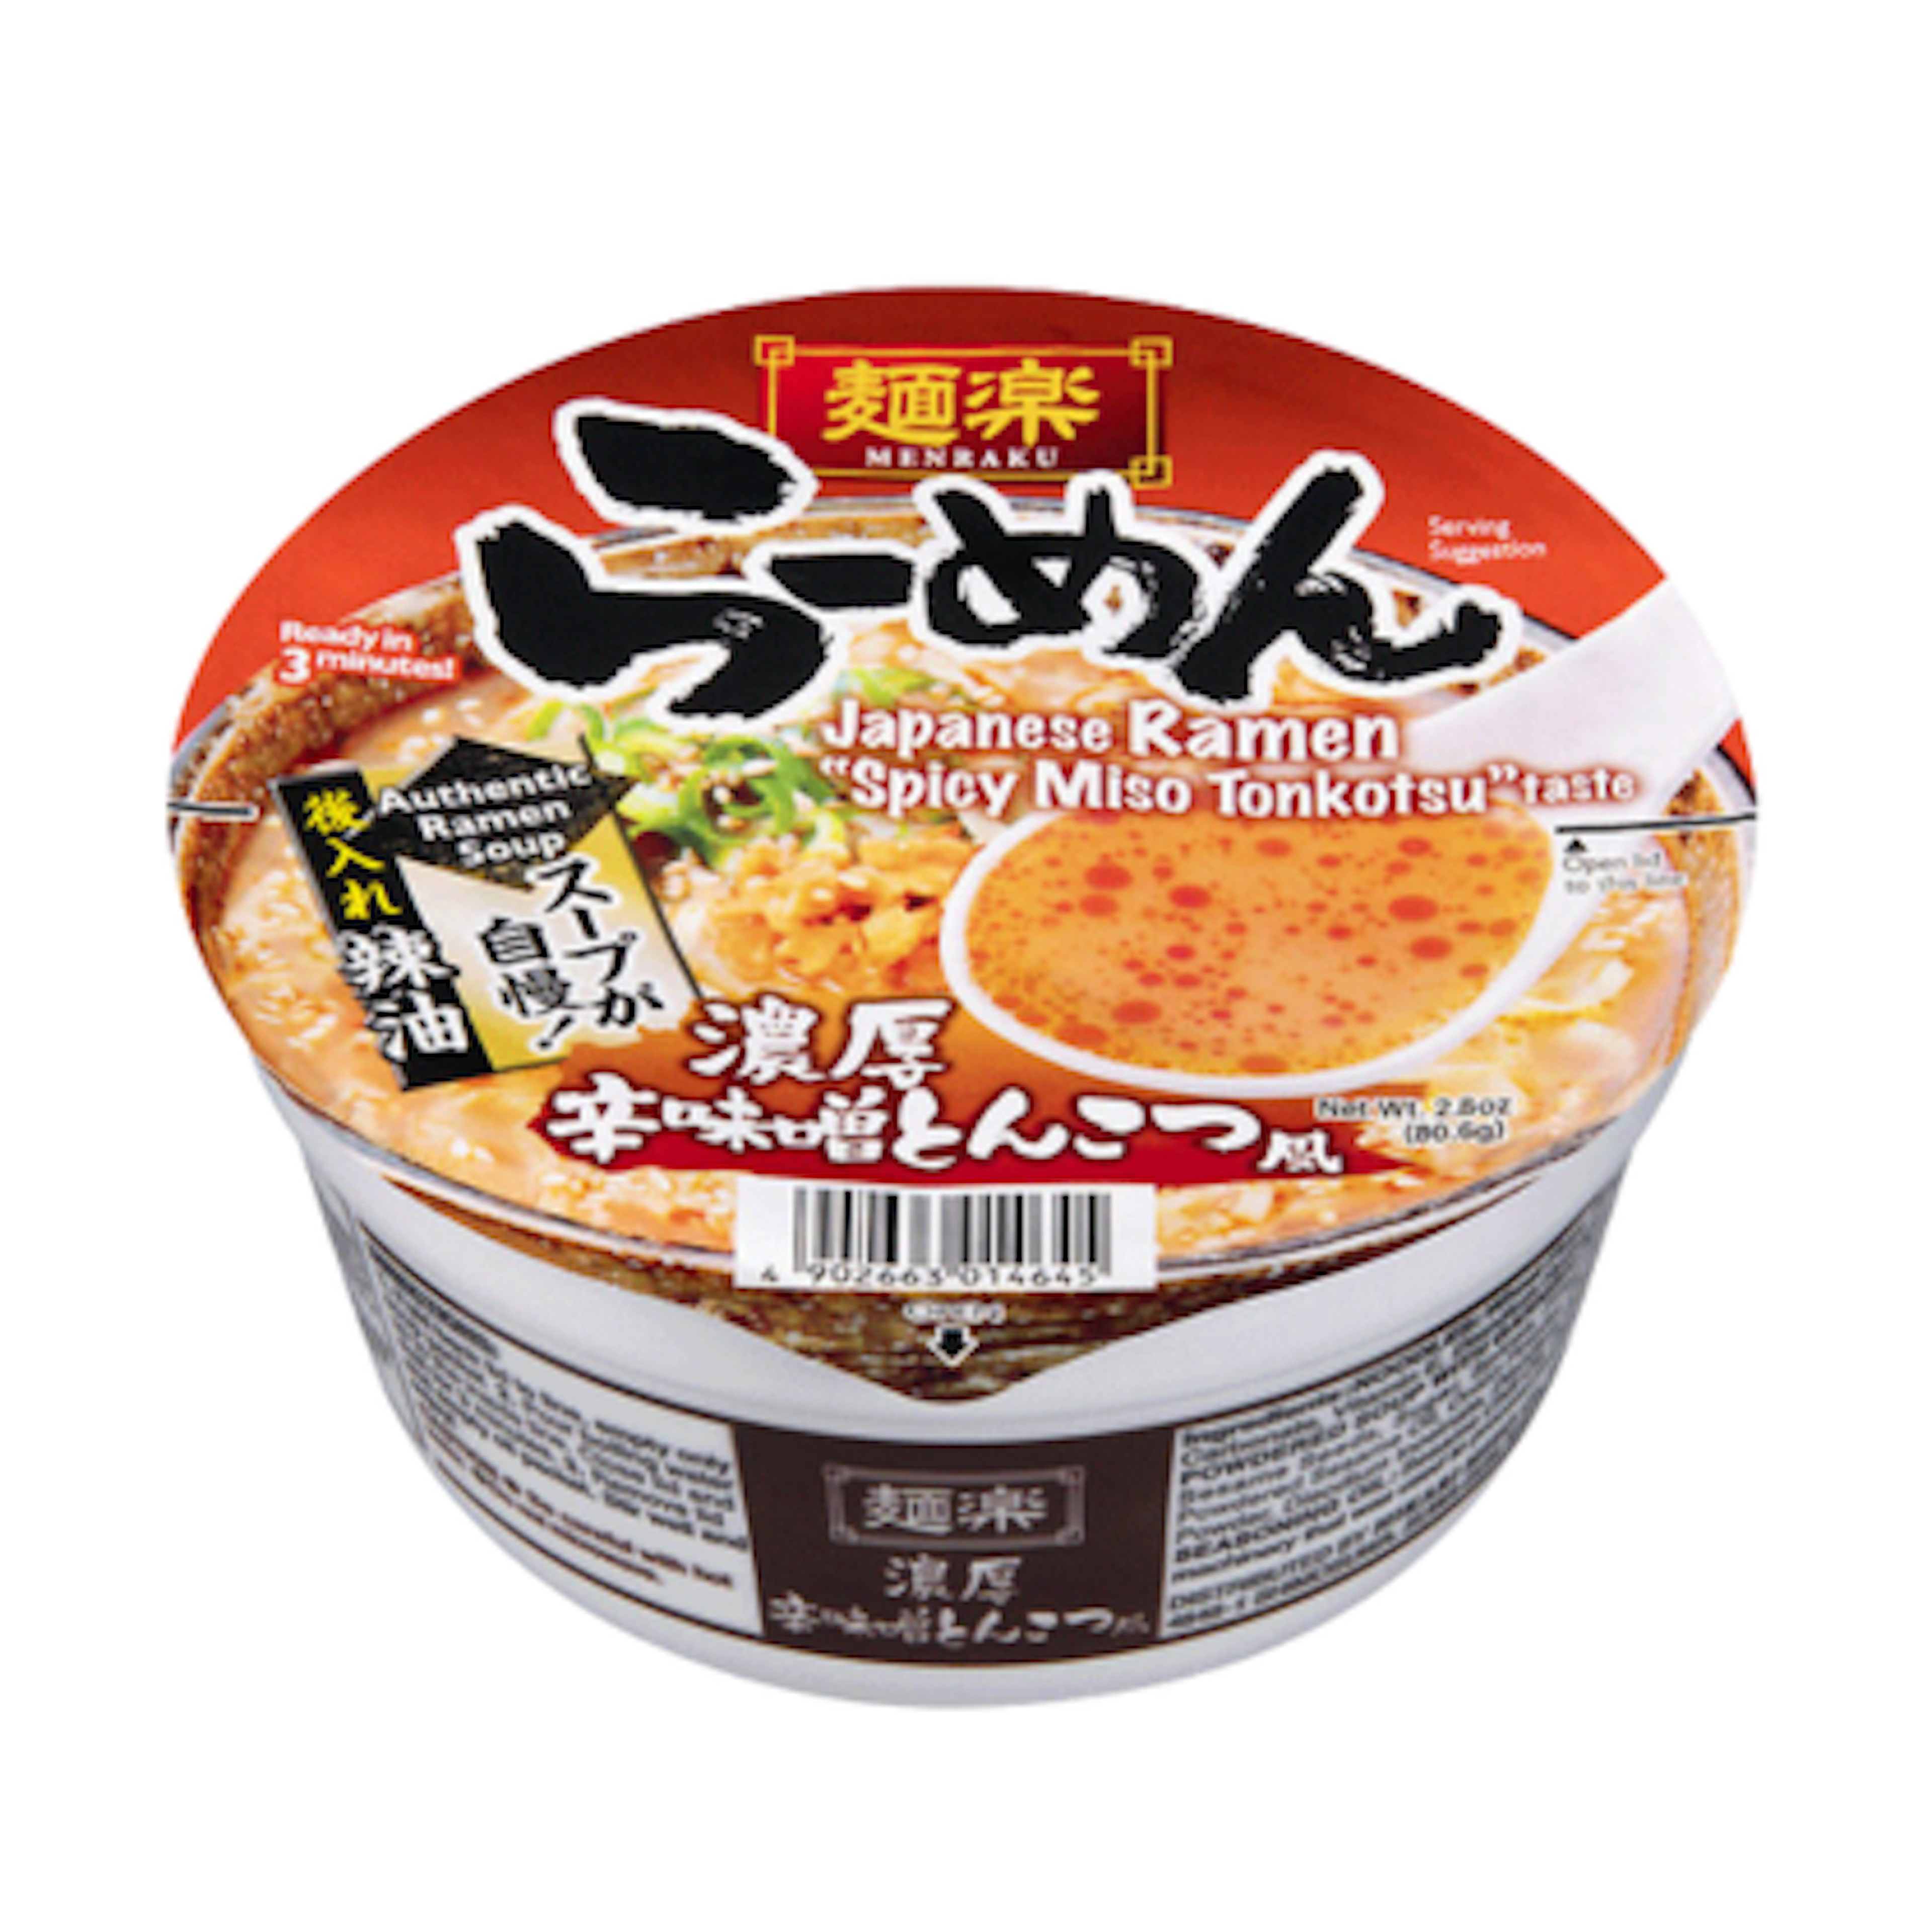 Hikari Menraku Japanische Spicy Miso Tonkotsu Ramen Cup - Authentischer japanischer Ramen, 80.6g